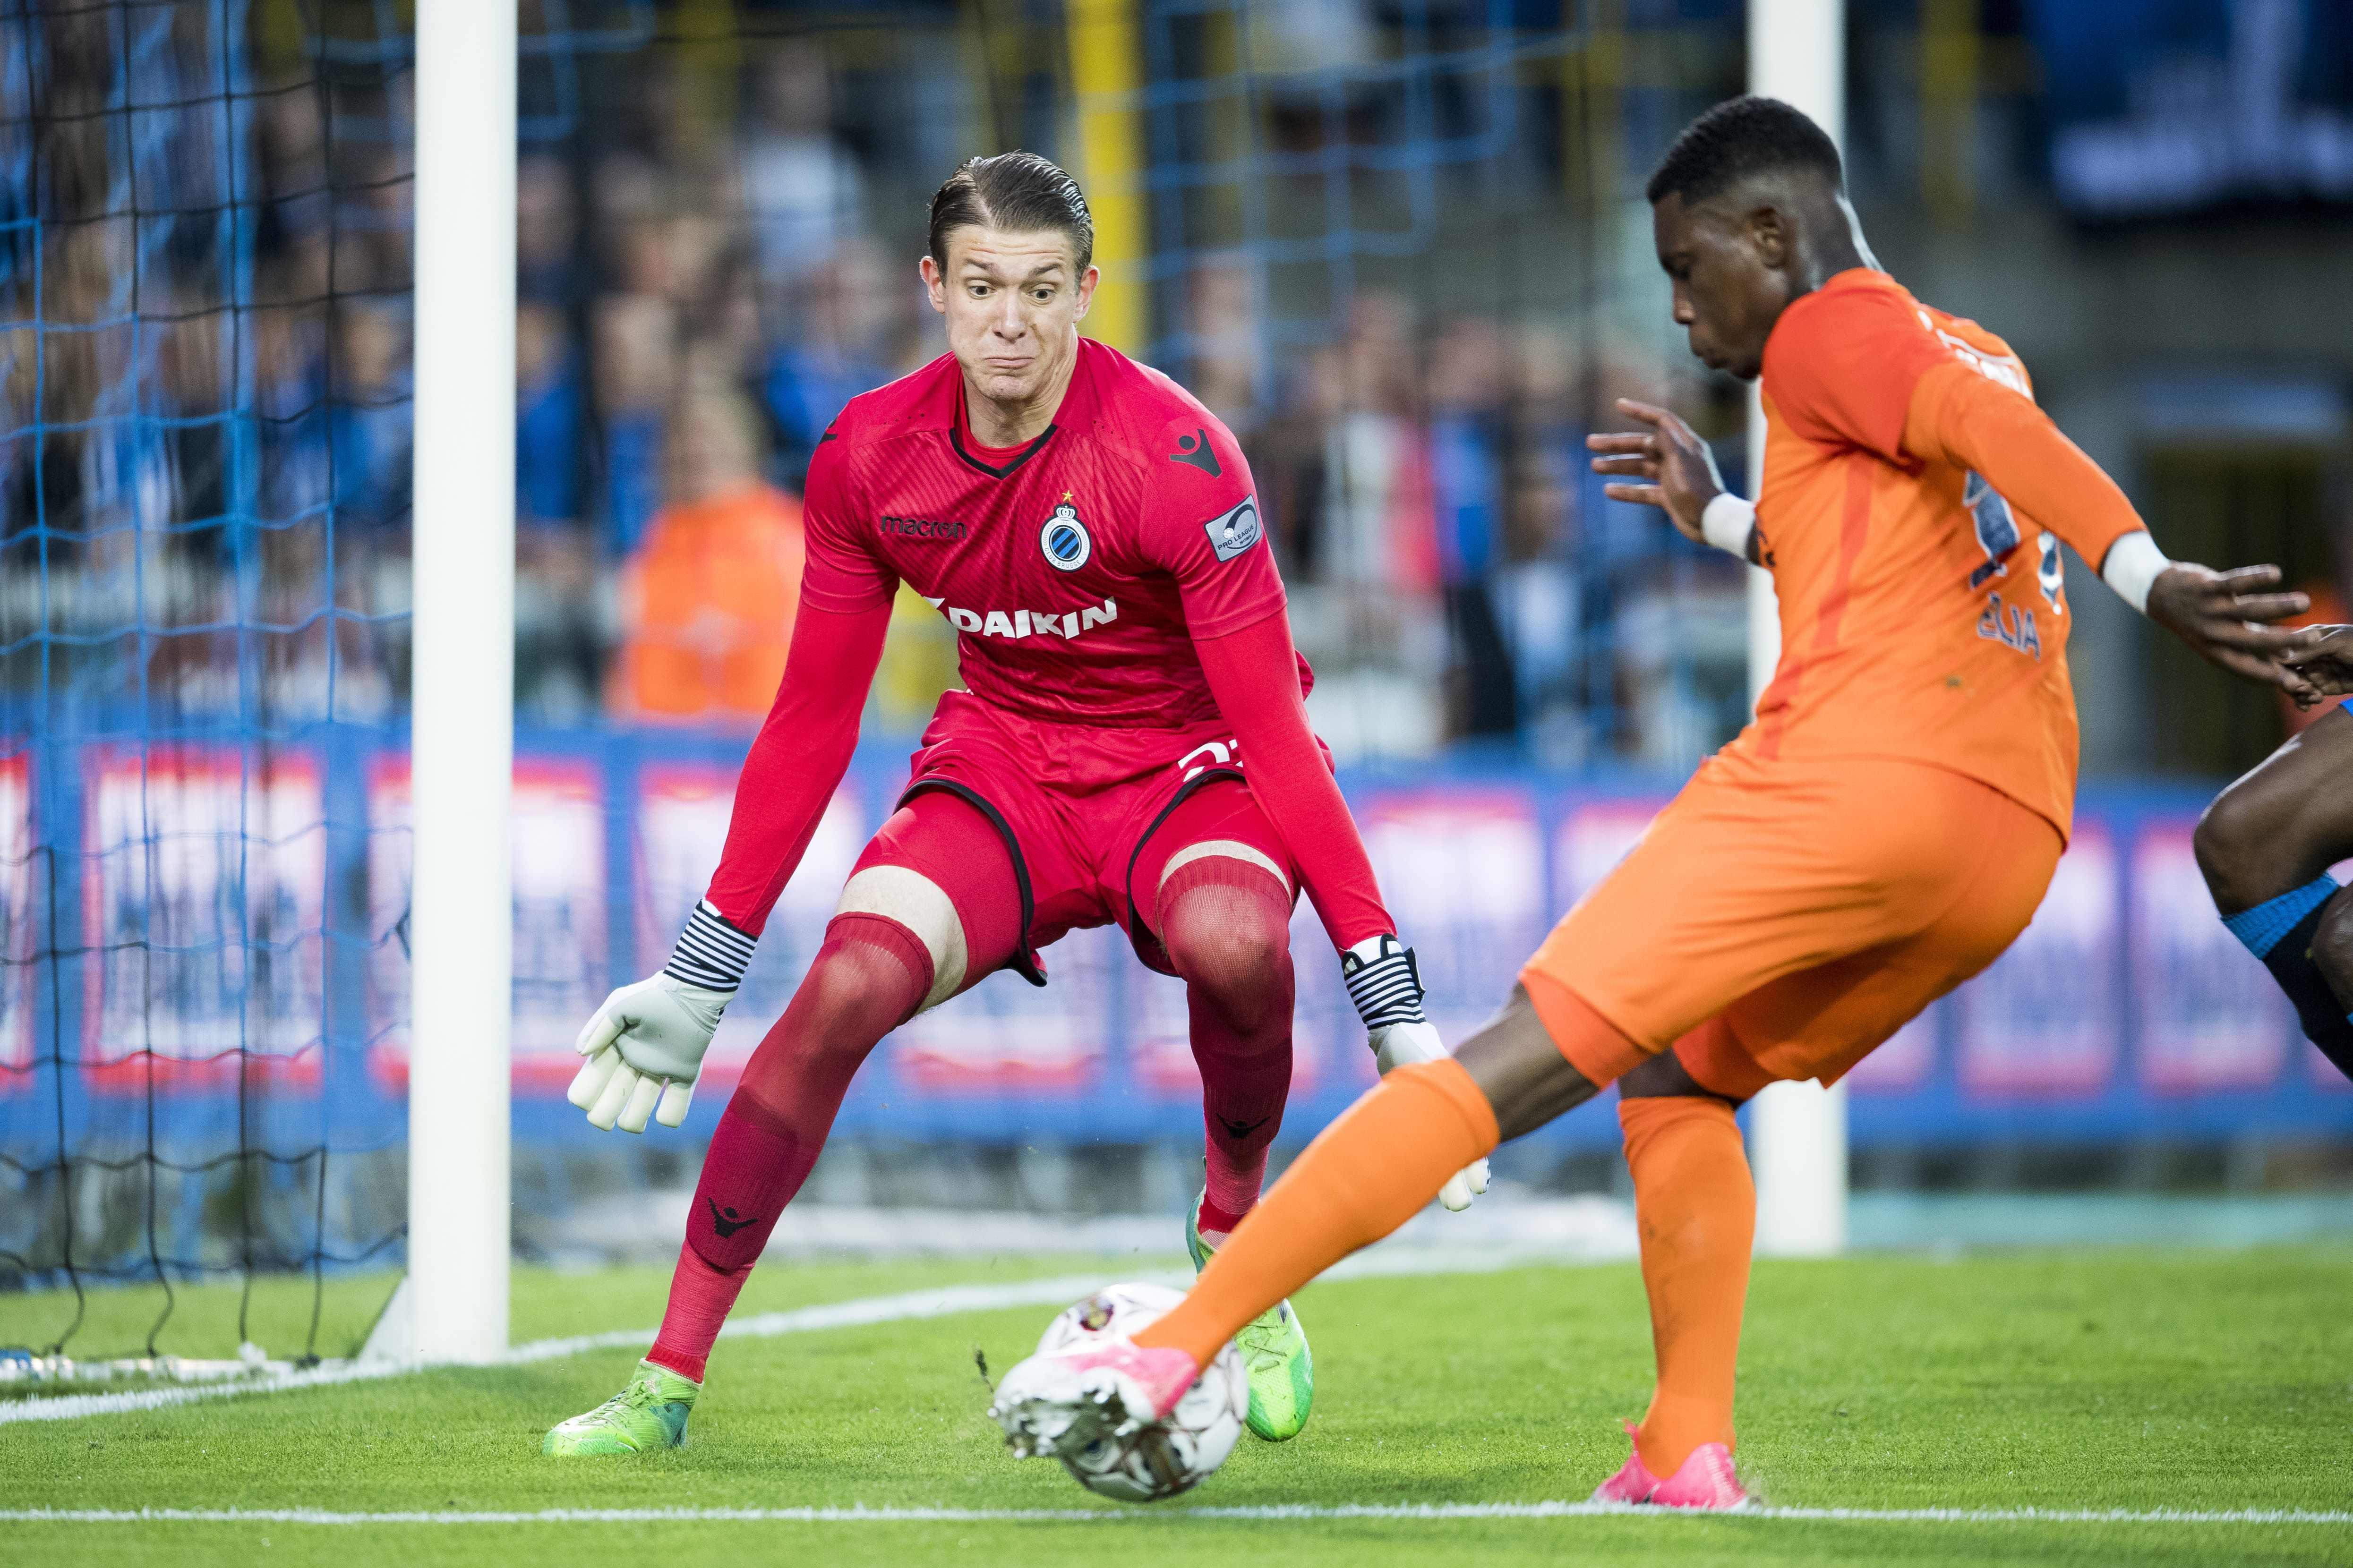 ÖZET | Club Brugge - Başakşehir maç sonucu: 3-3